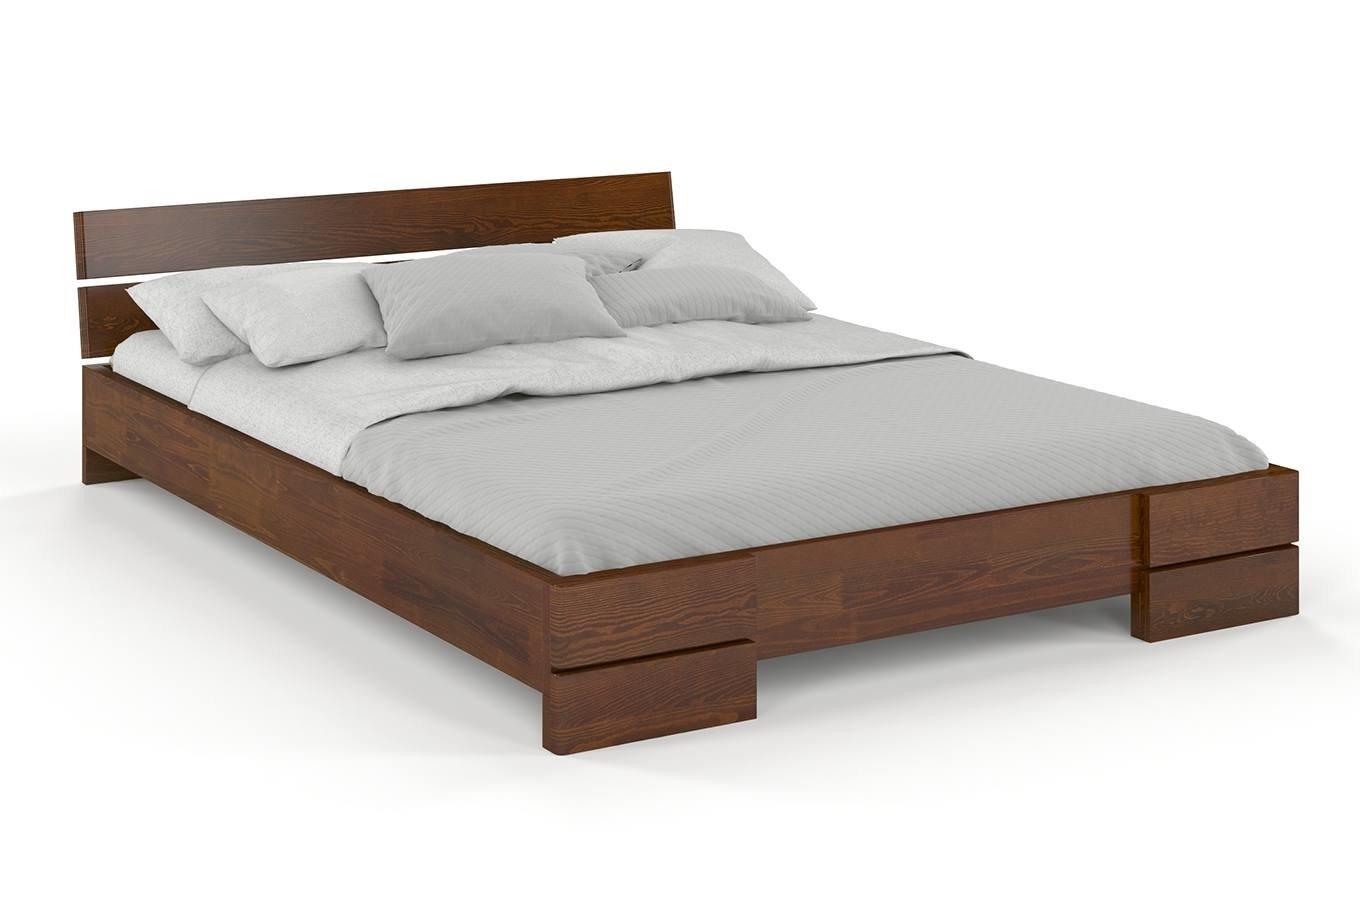 Łóżko drewniane sosnowe Visby Sandemo LONG (długość + 20 cm) / 140x220 cm, kolor orzech